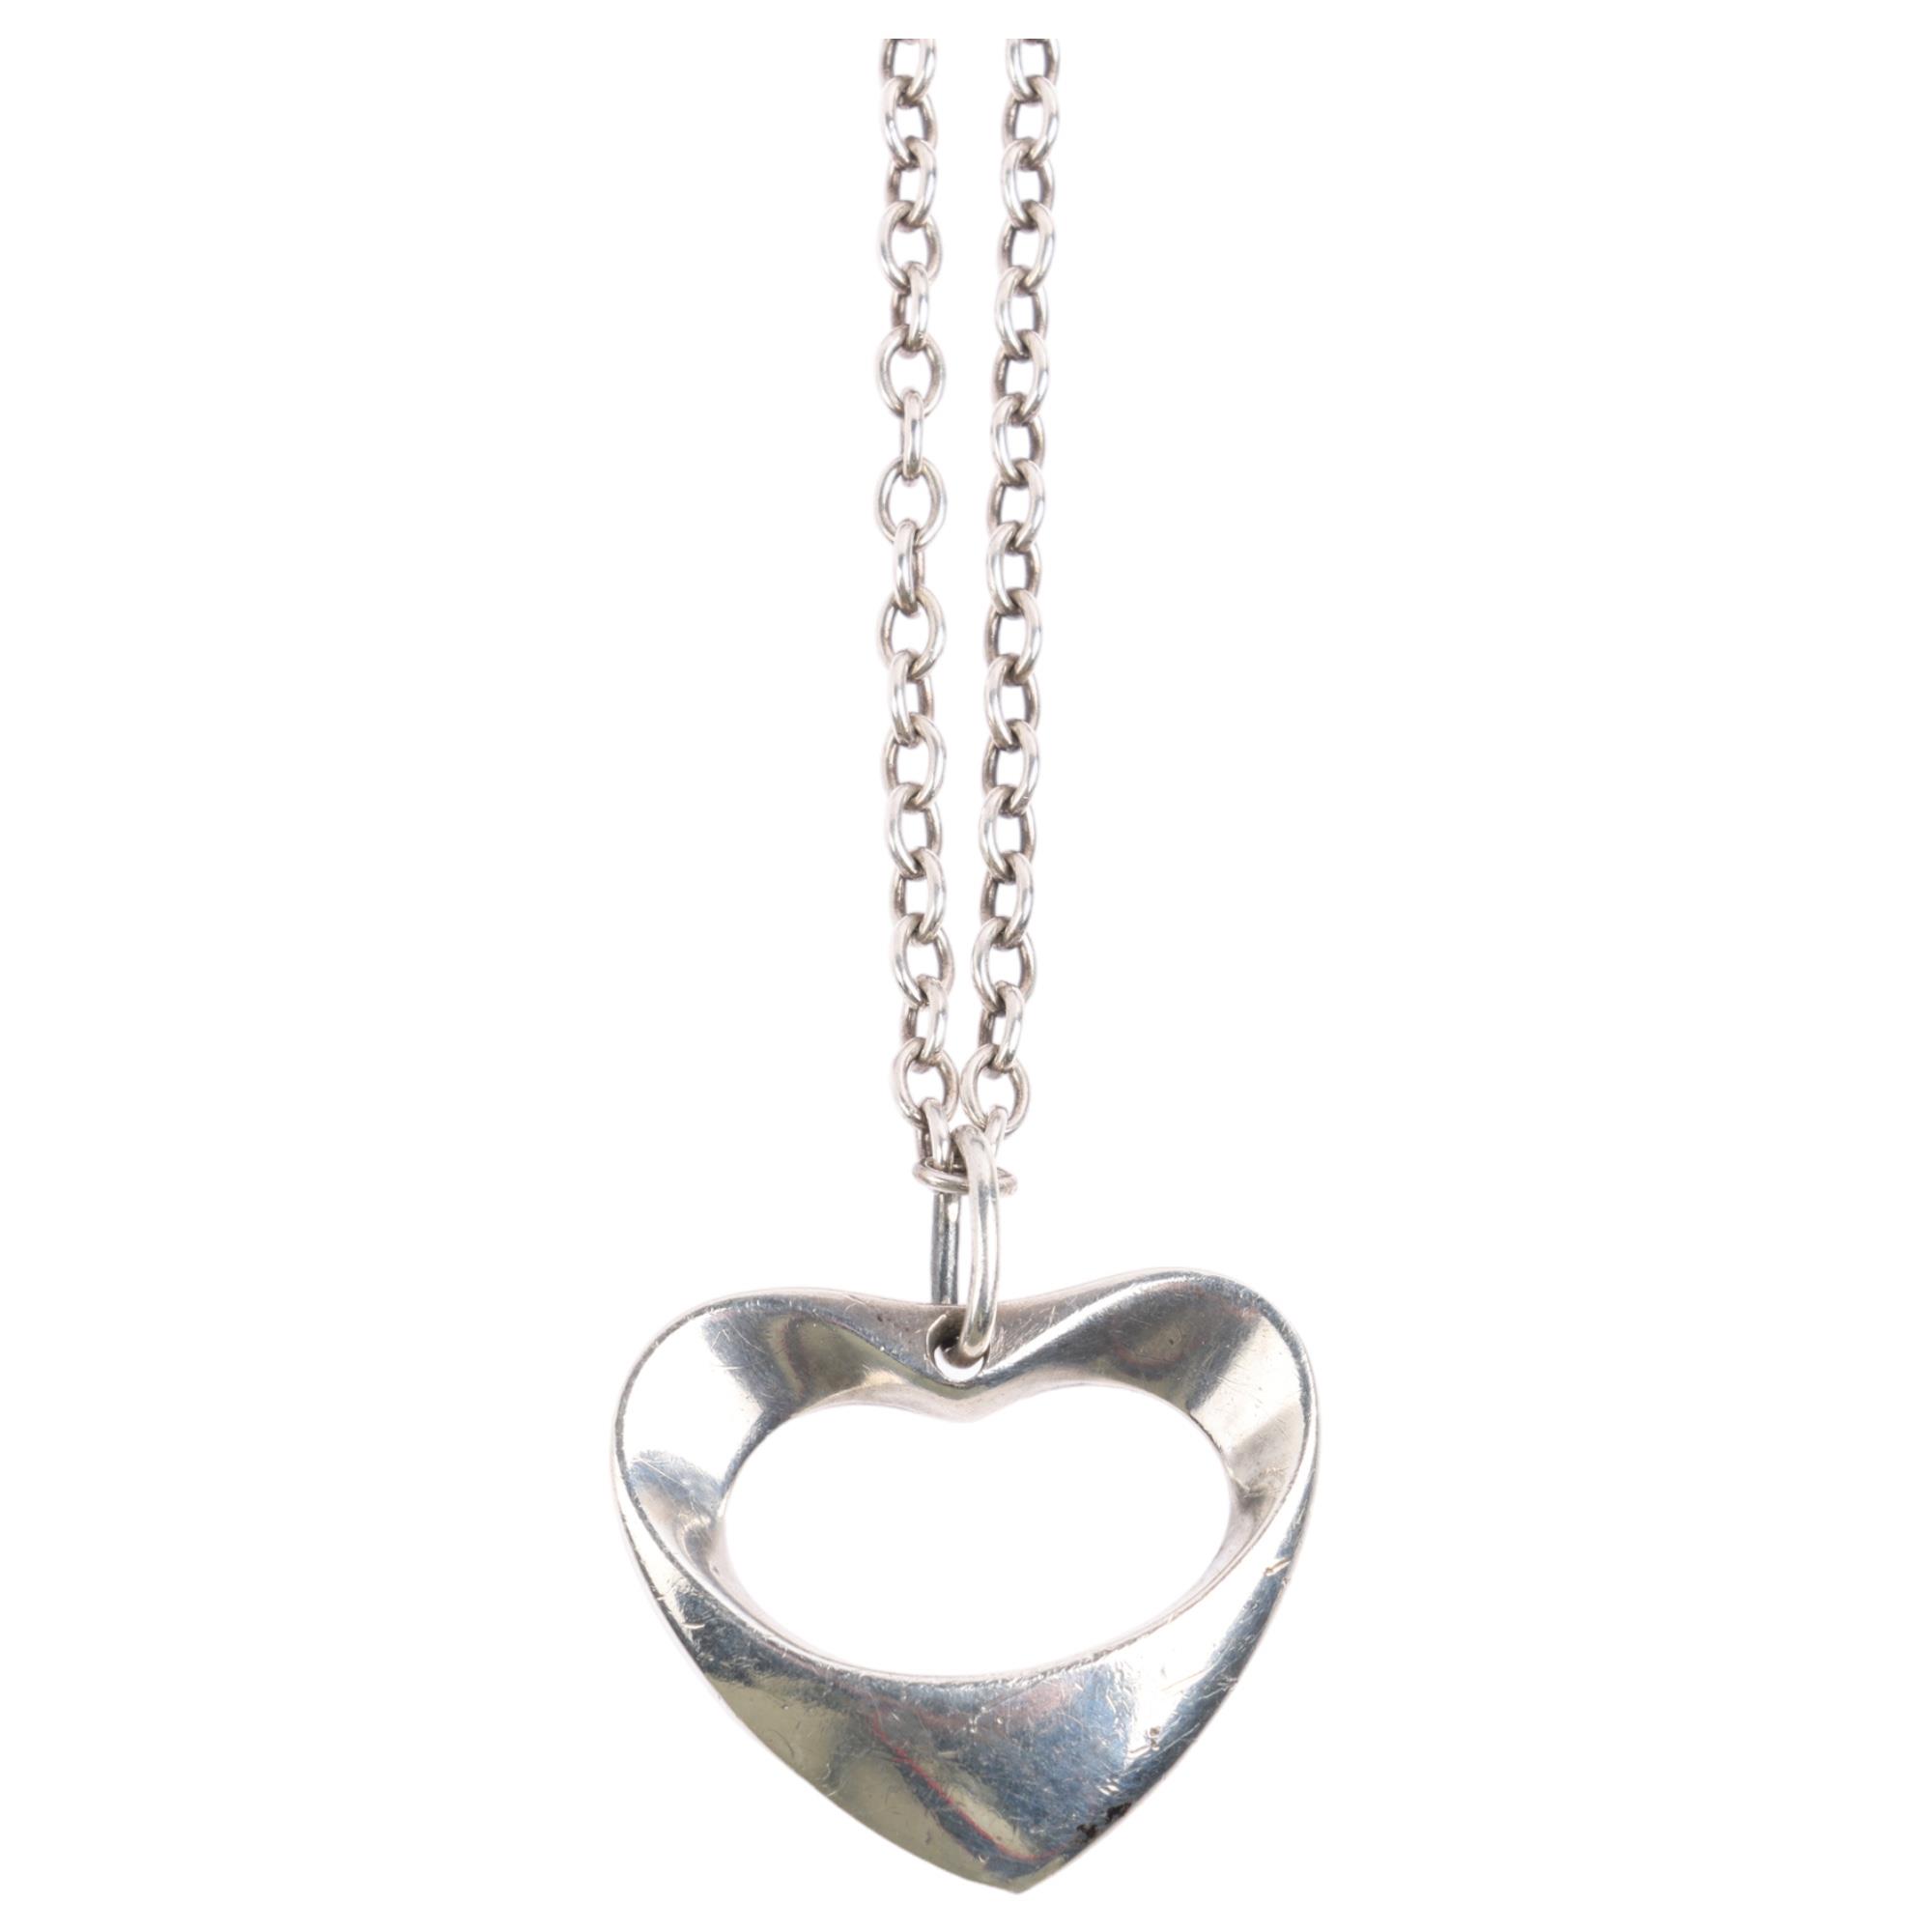 GEORG JENSEN - a Danish modernist sterling silver heart openwork pendant necklace, designed by